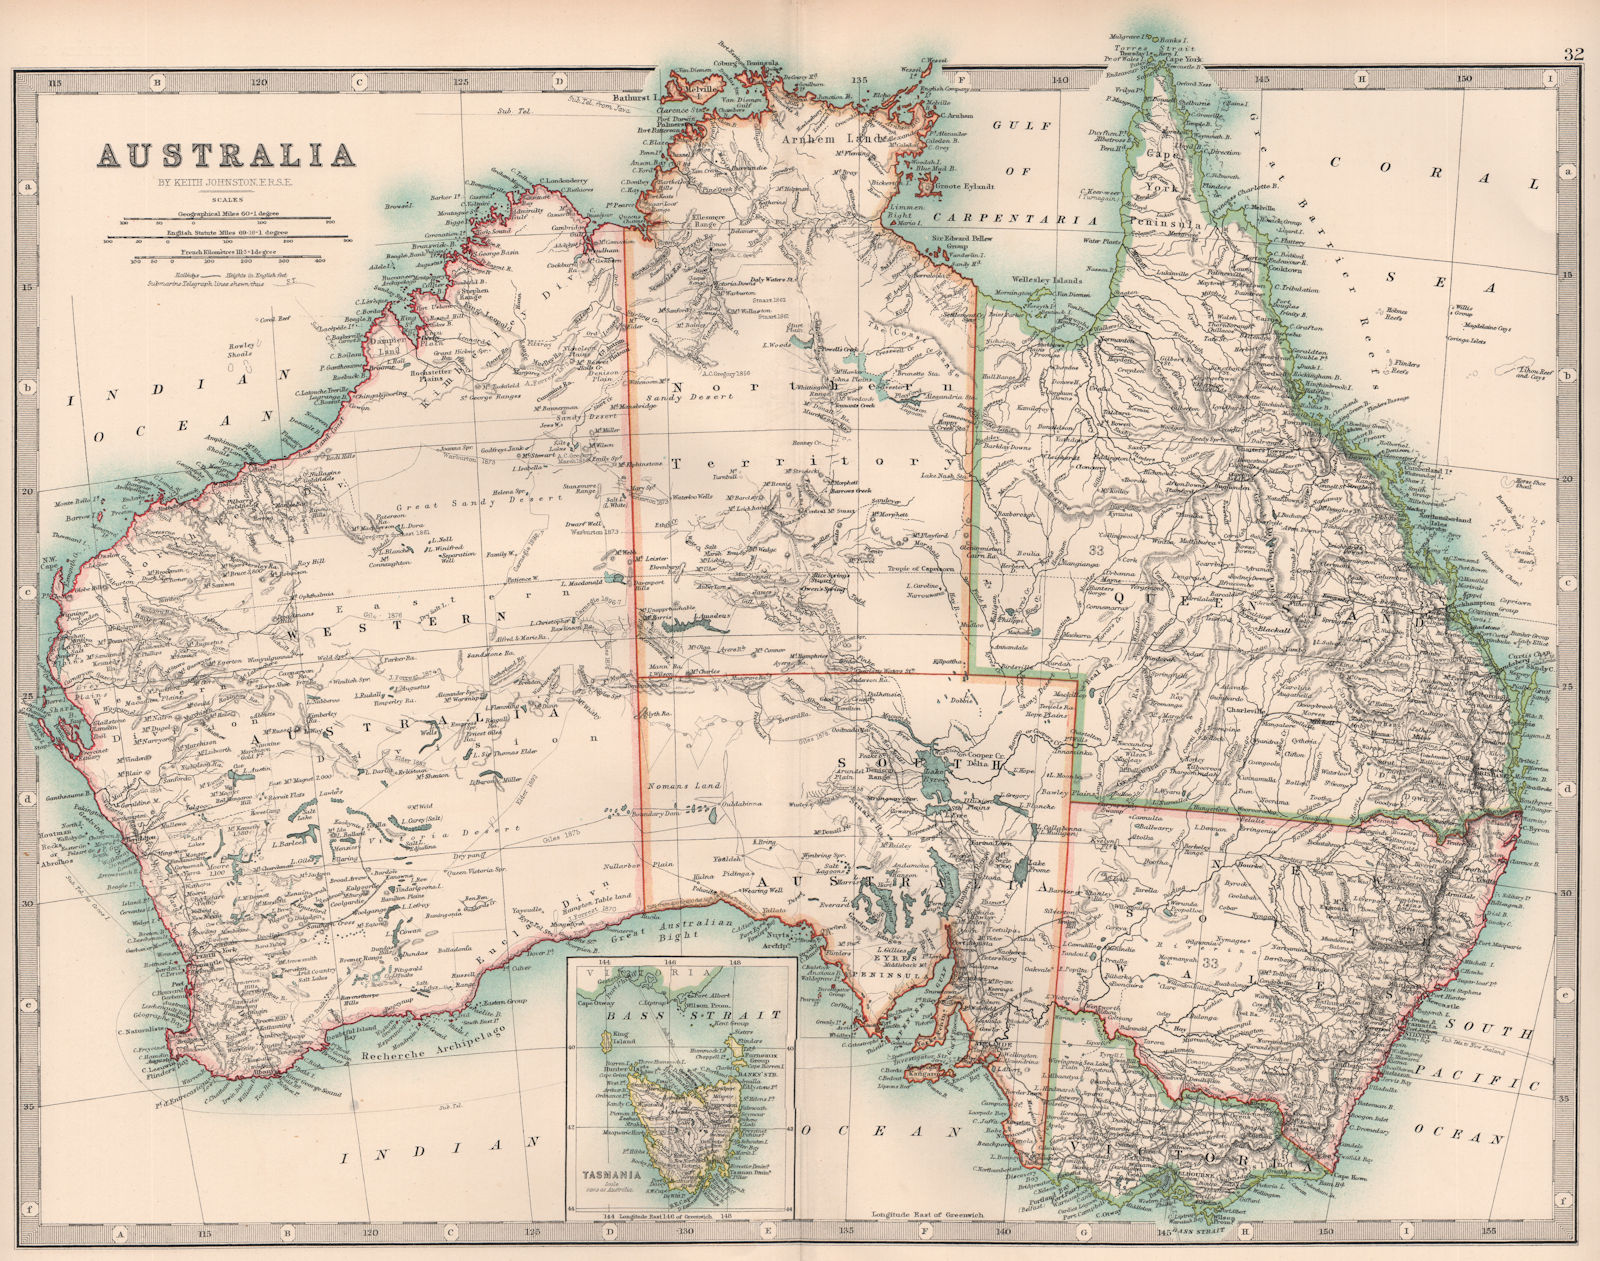 AUSTRALIA. Showing explorers' routes with dates. Railways. JOHNSTON 1906 map